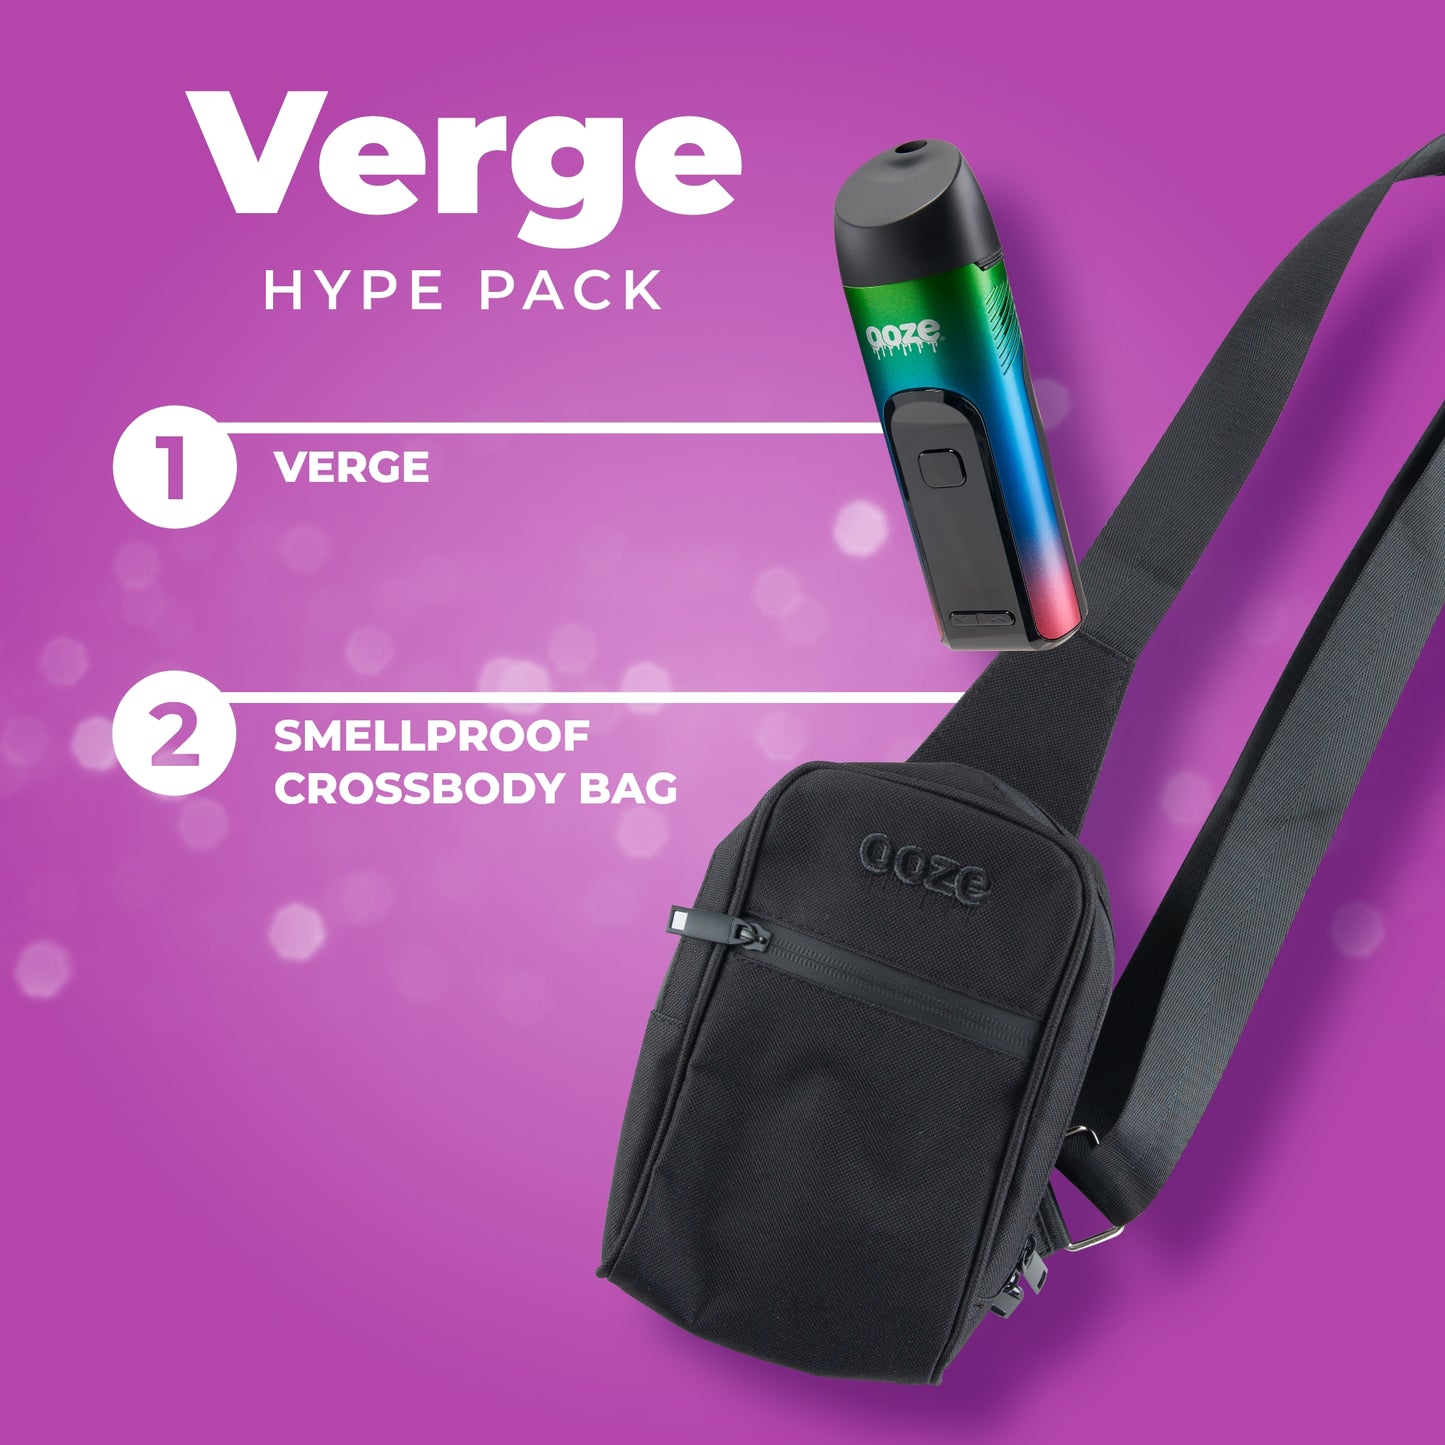 Verge Hype Pack